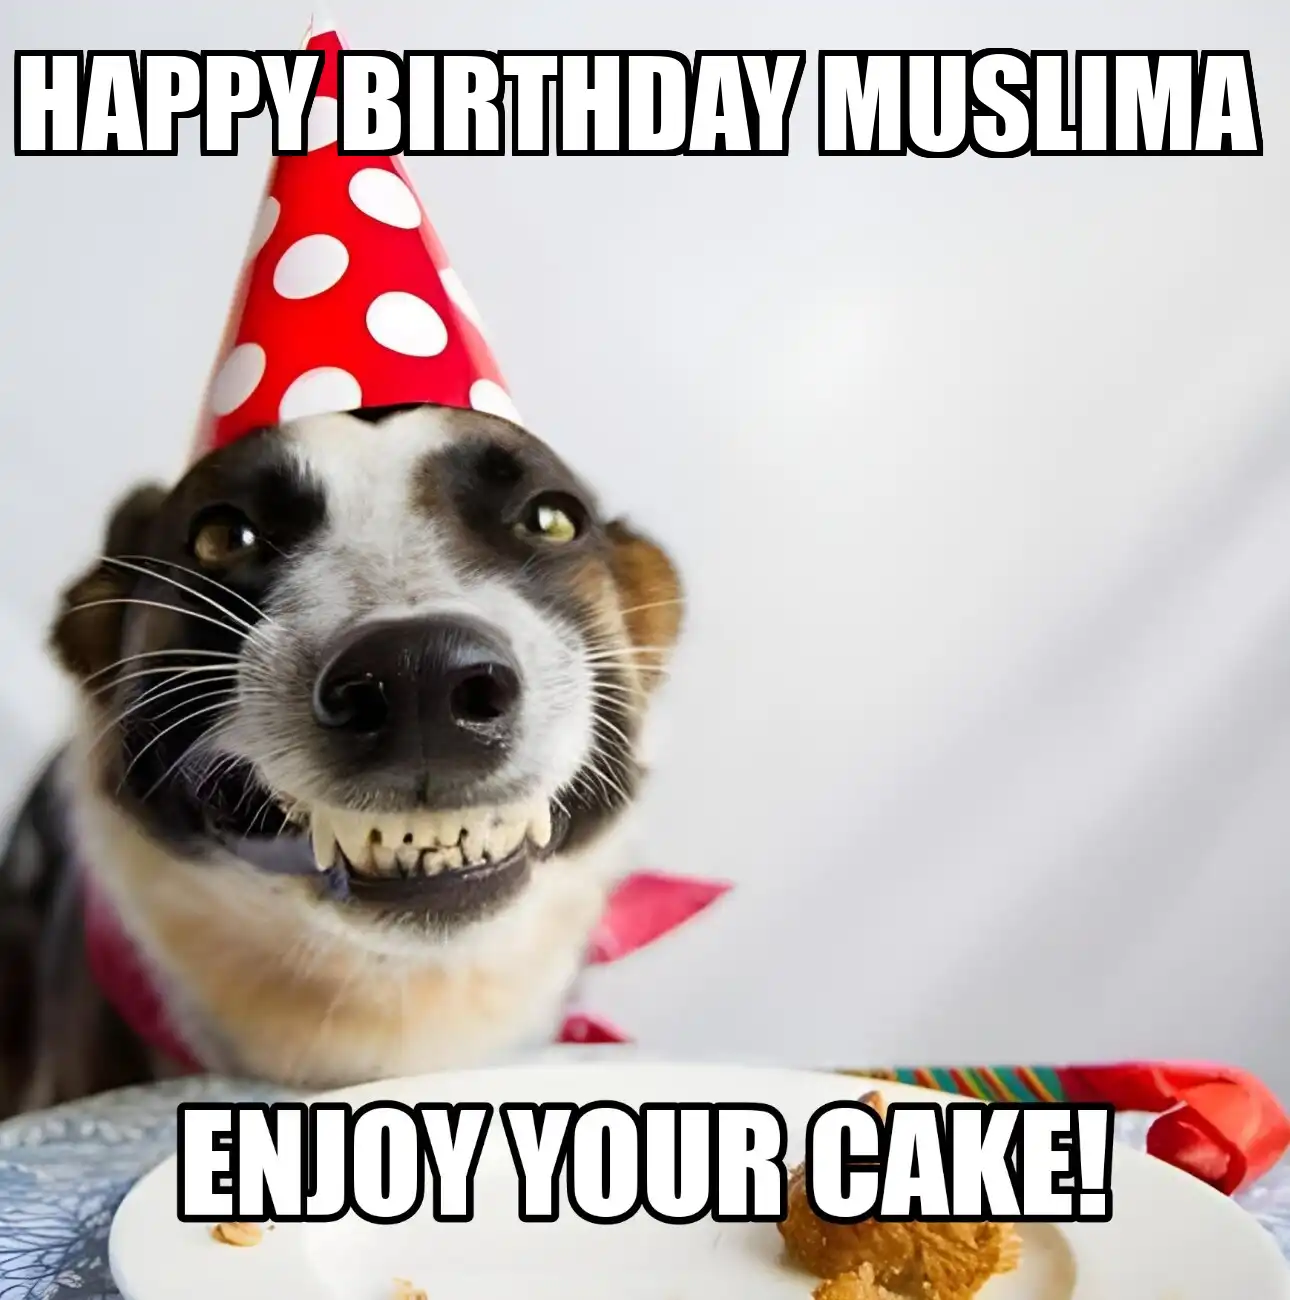 Happy Birthday Muslima Enjoy Your Cake Dog Meme